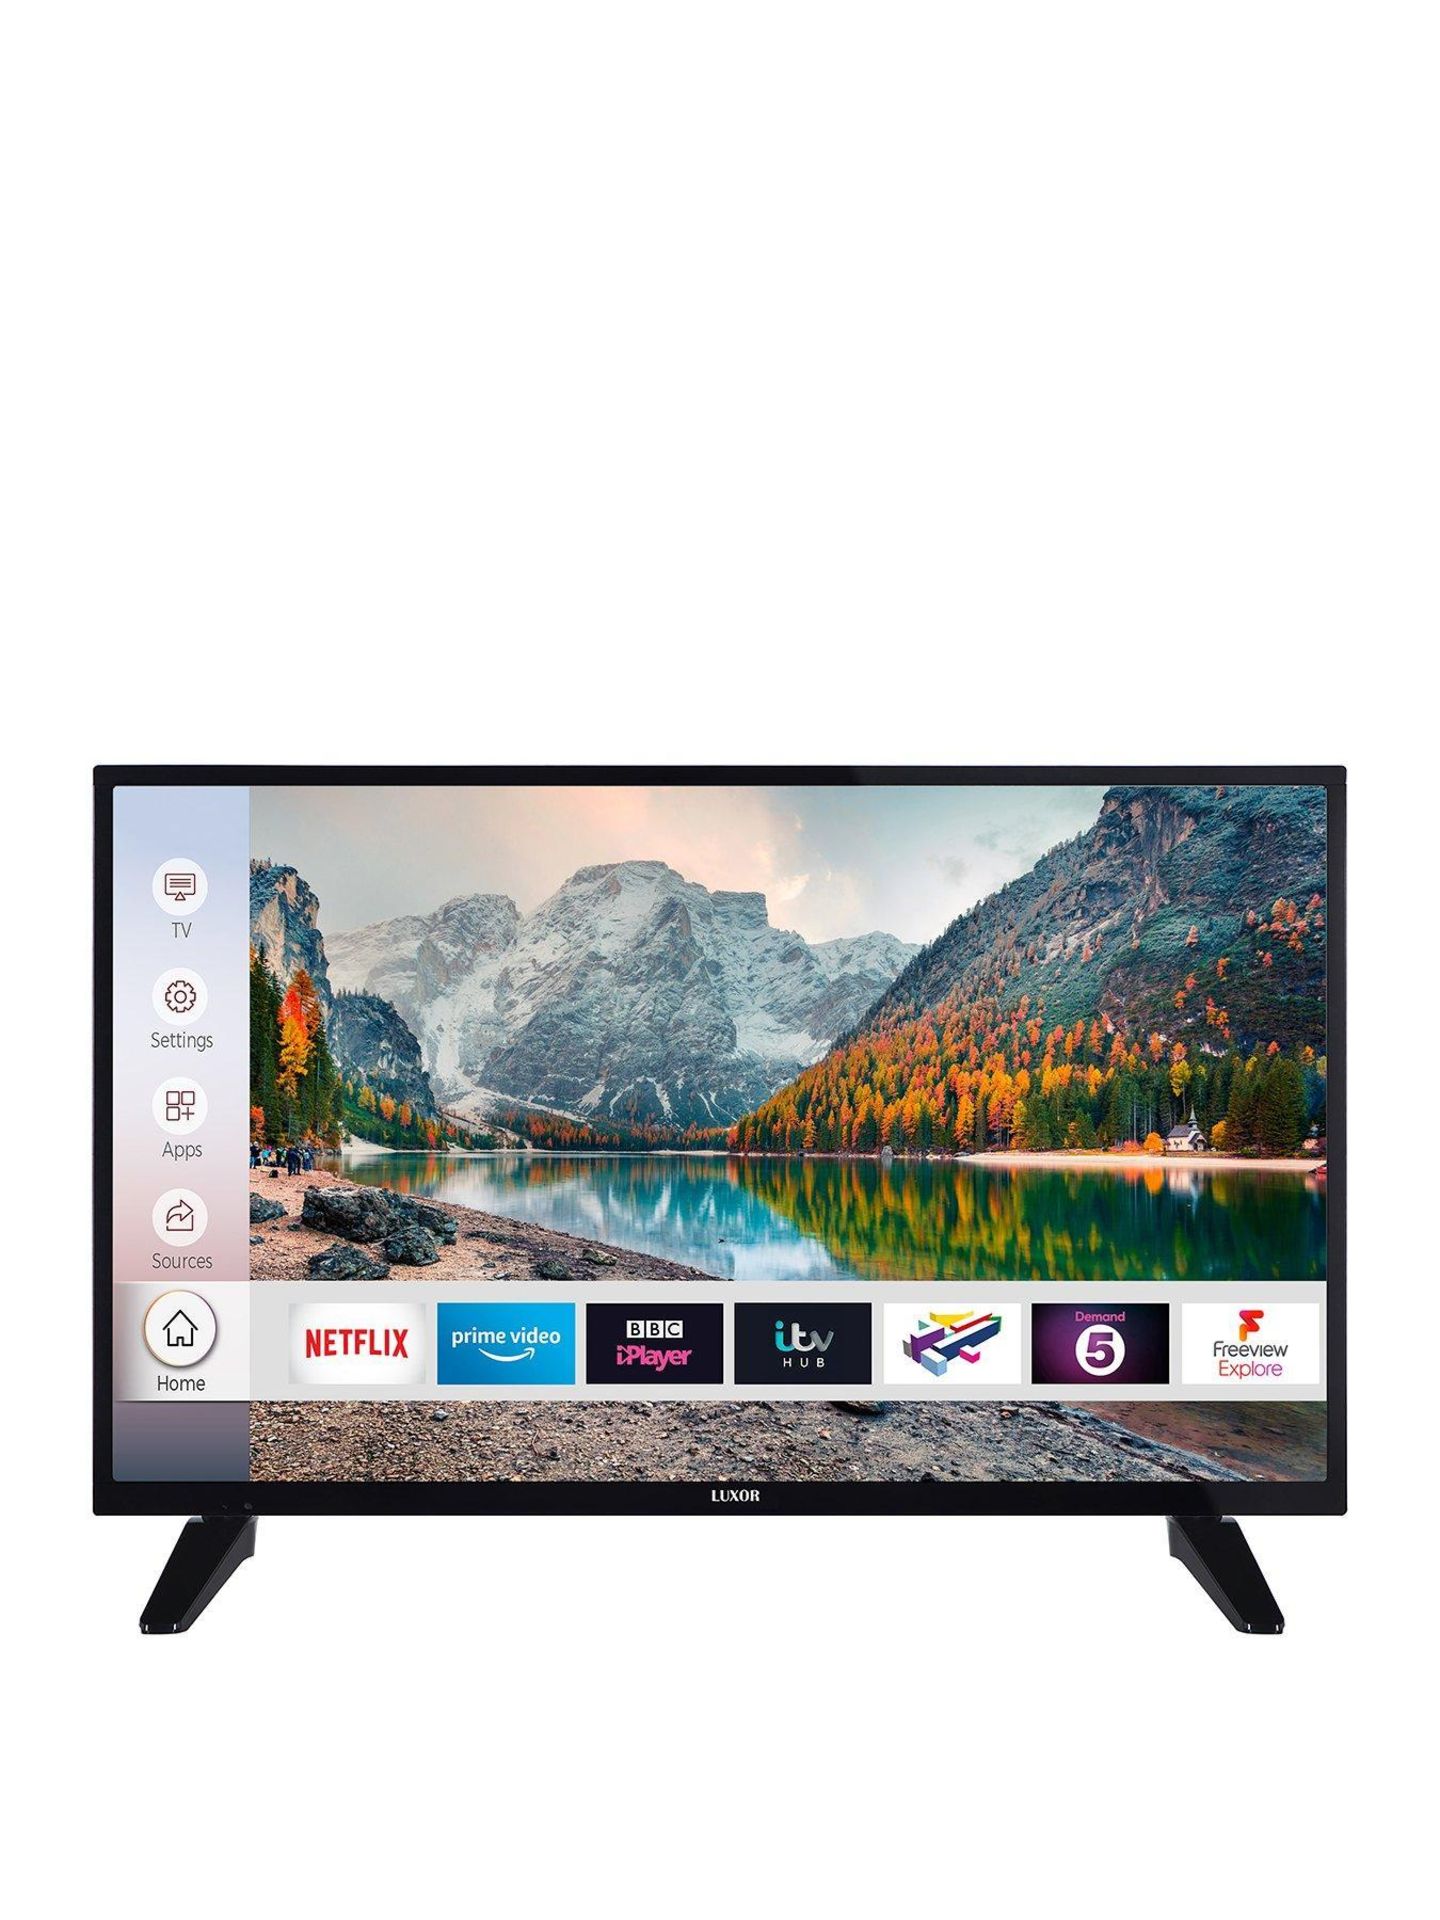 Luxor 32 inch hd ready, freeview play, smart tv [black] 48x74x19cm rrp: £298.0